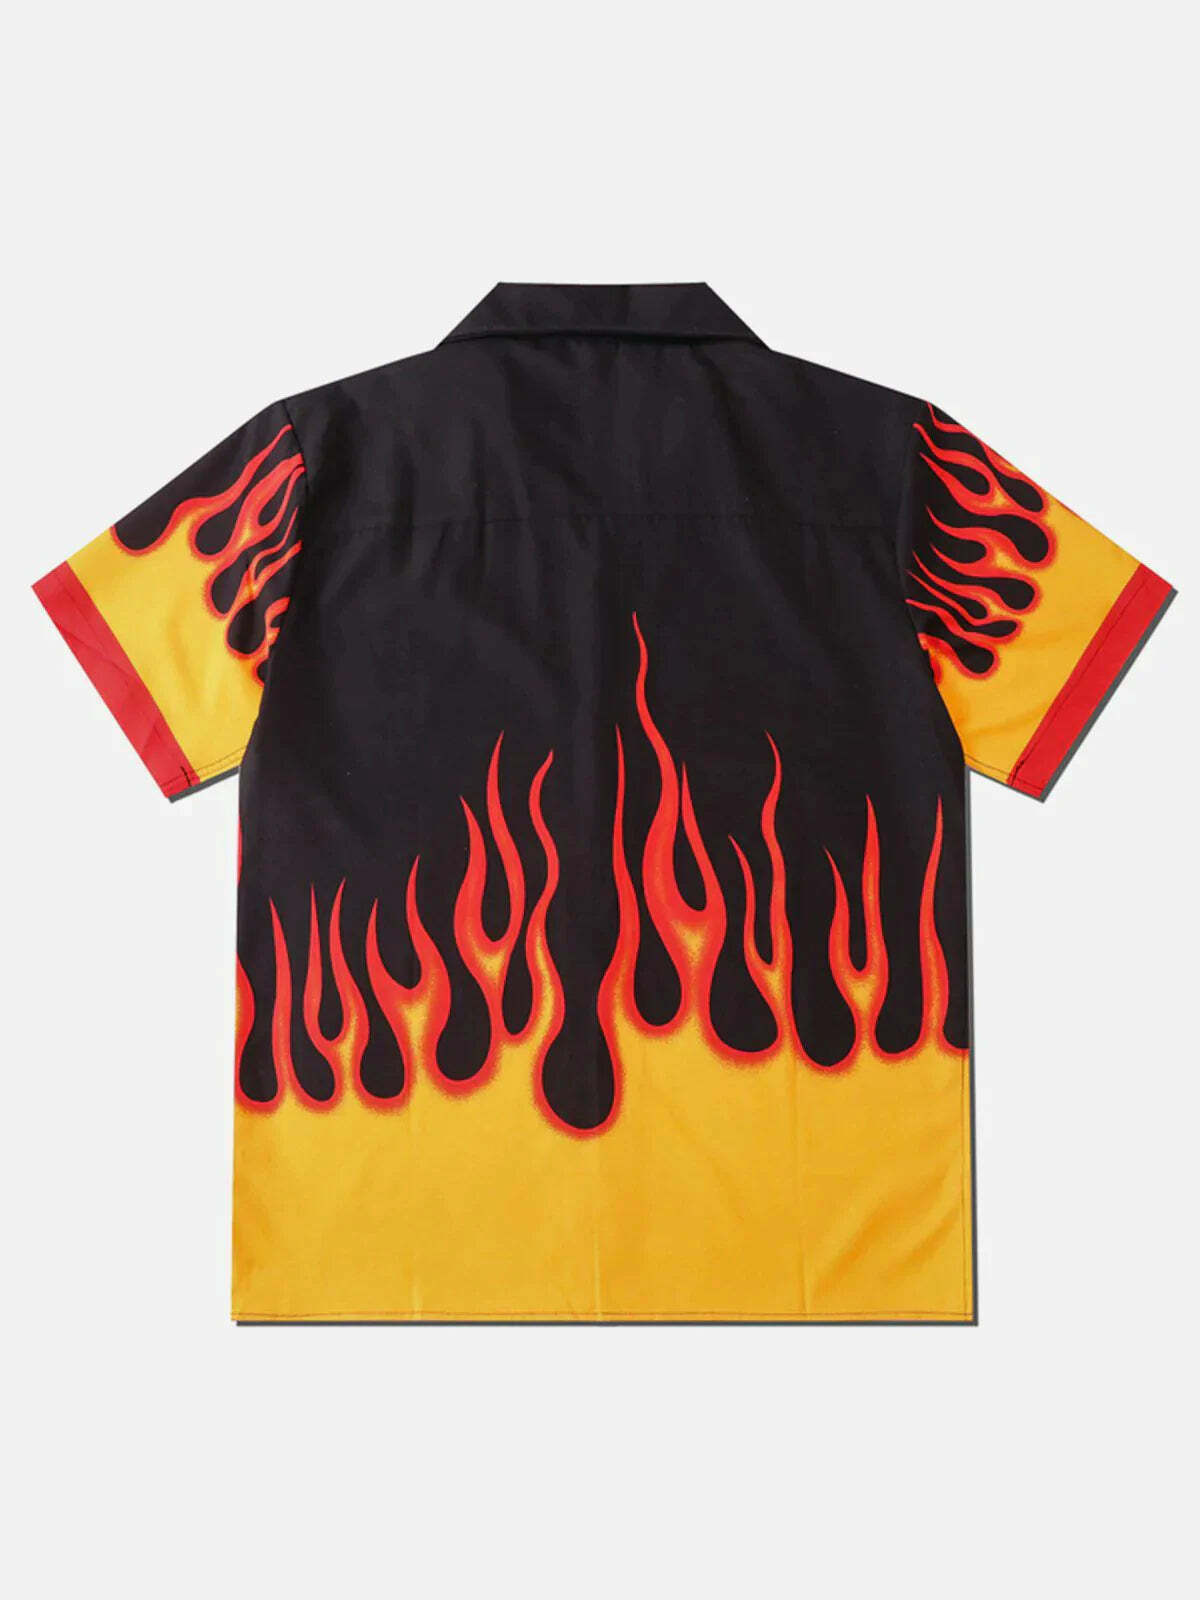 retro flame print tee edgy  vibrant short sleeve shirt 2543